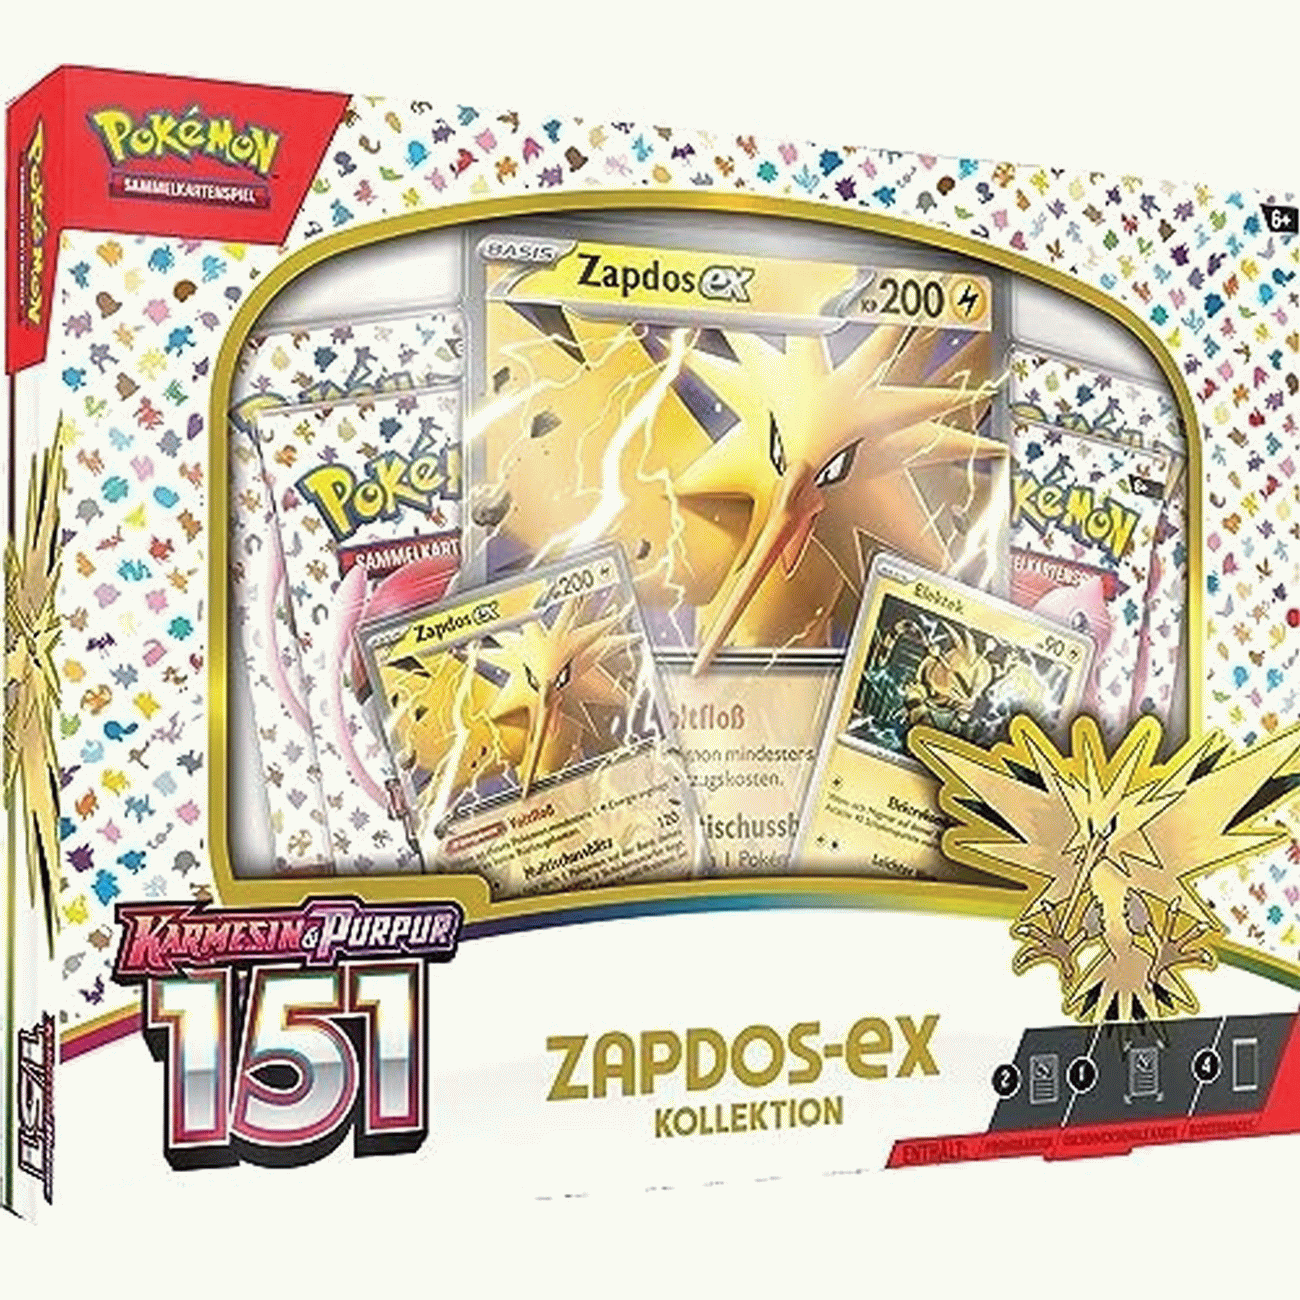 Zapdos ex - Pokemon Kollektion